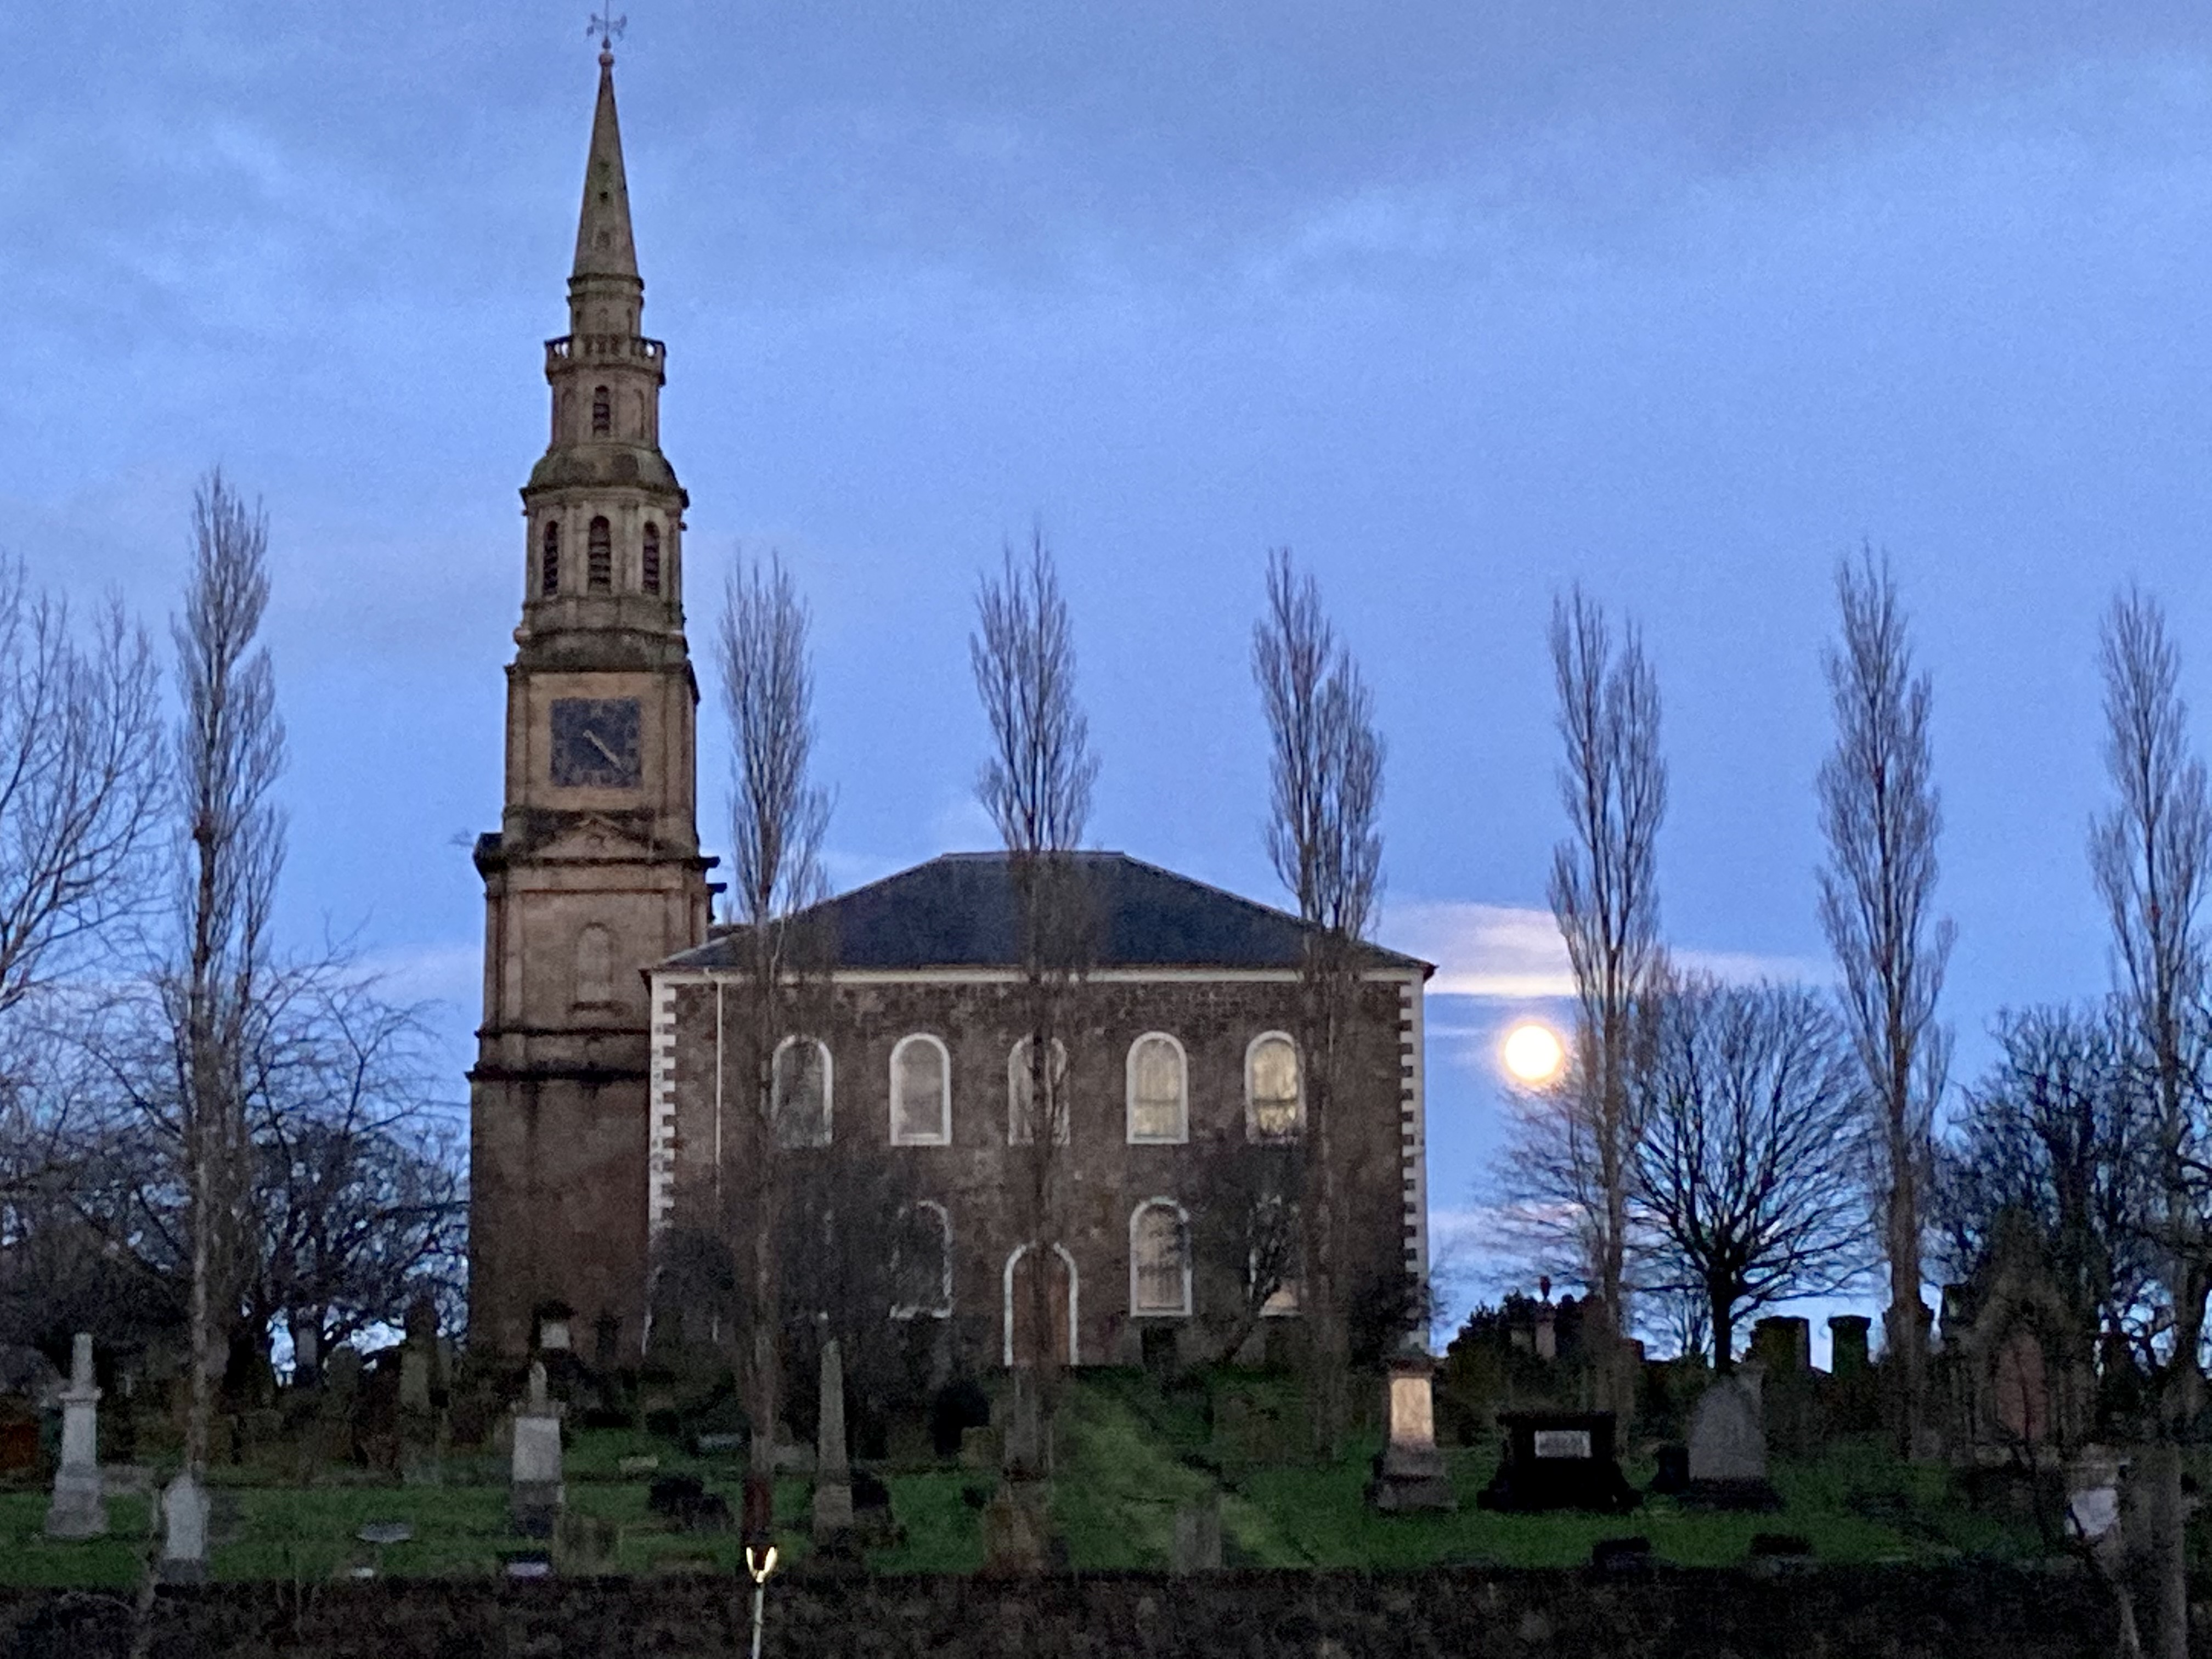 Irvine Old Parish Church and Graveyard.